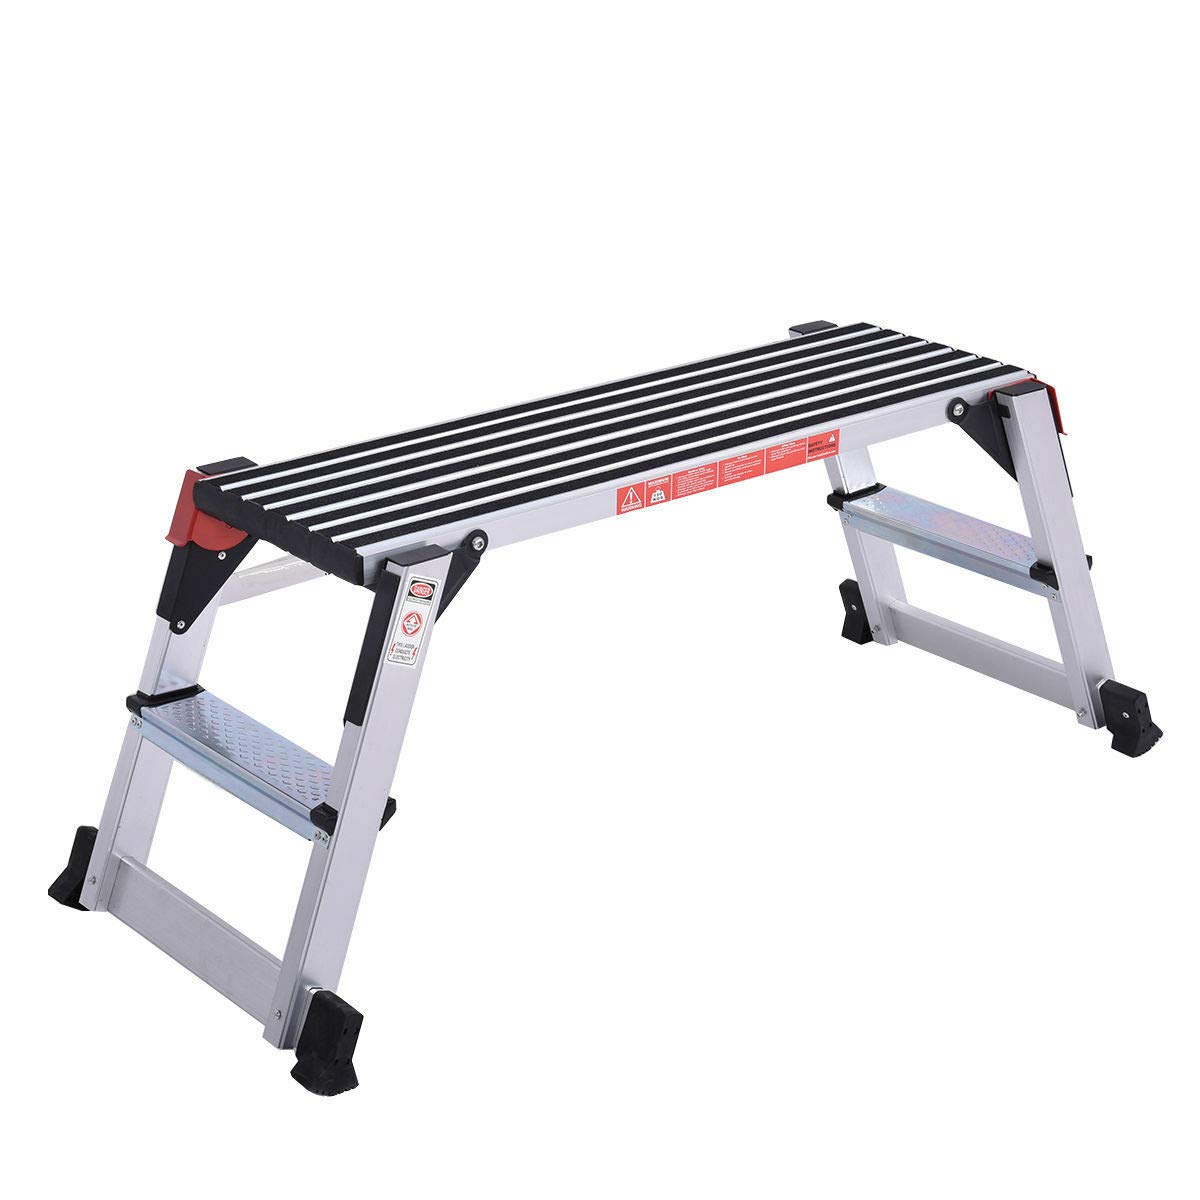 Giantex Aluminum Platform Non-Slip Folding Work Bench Drywall Stool Ladder 330lbs Capacity